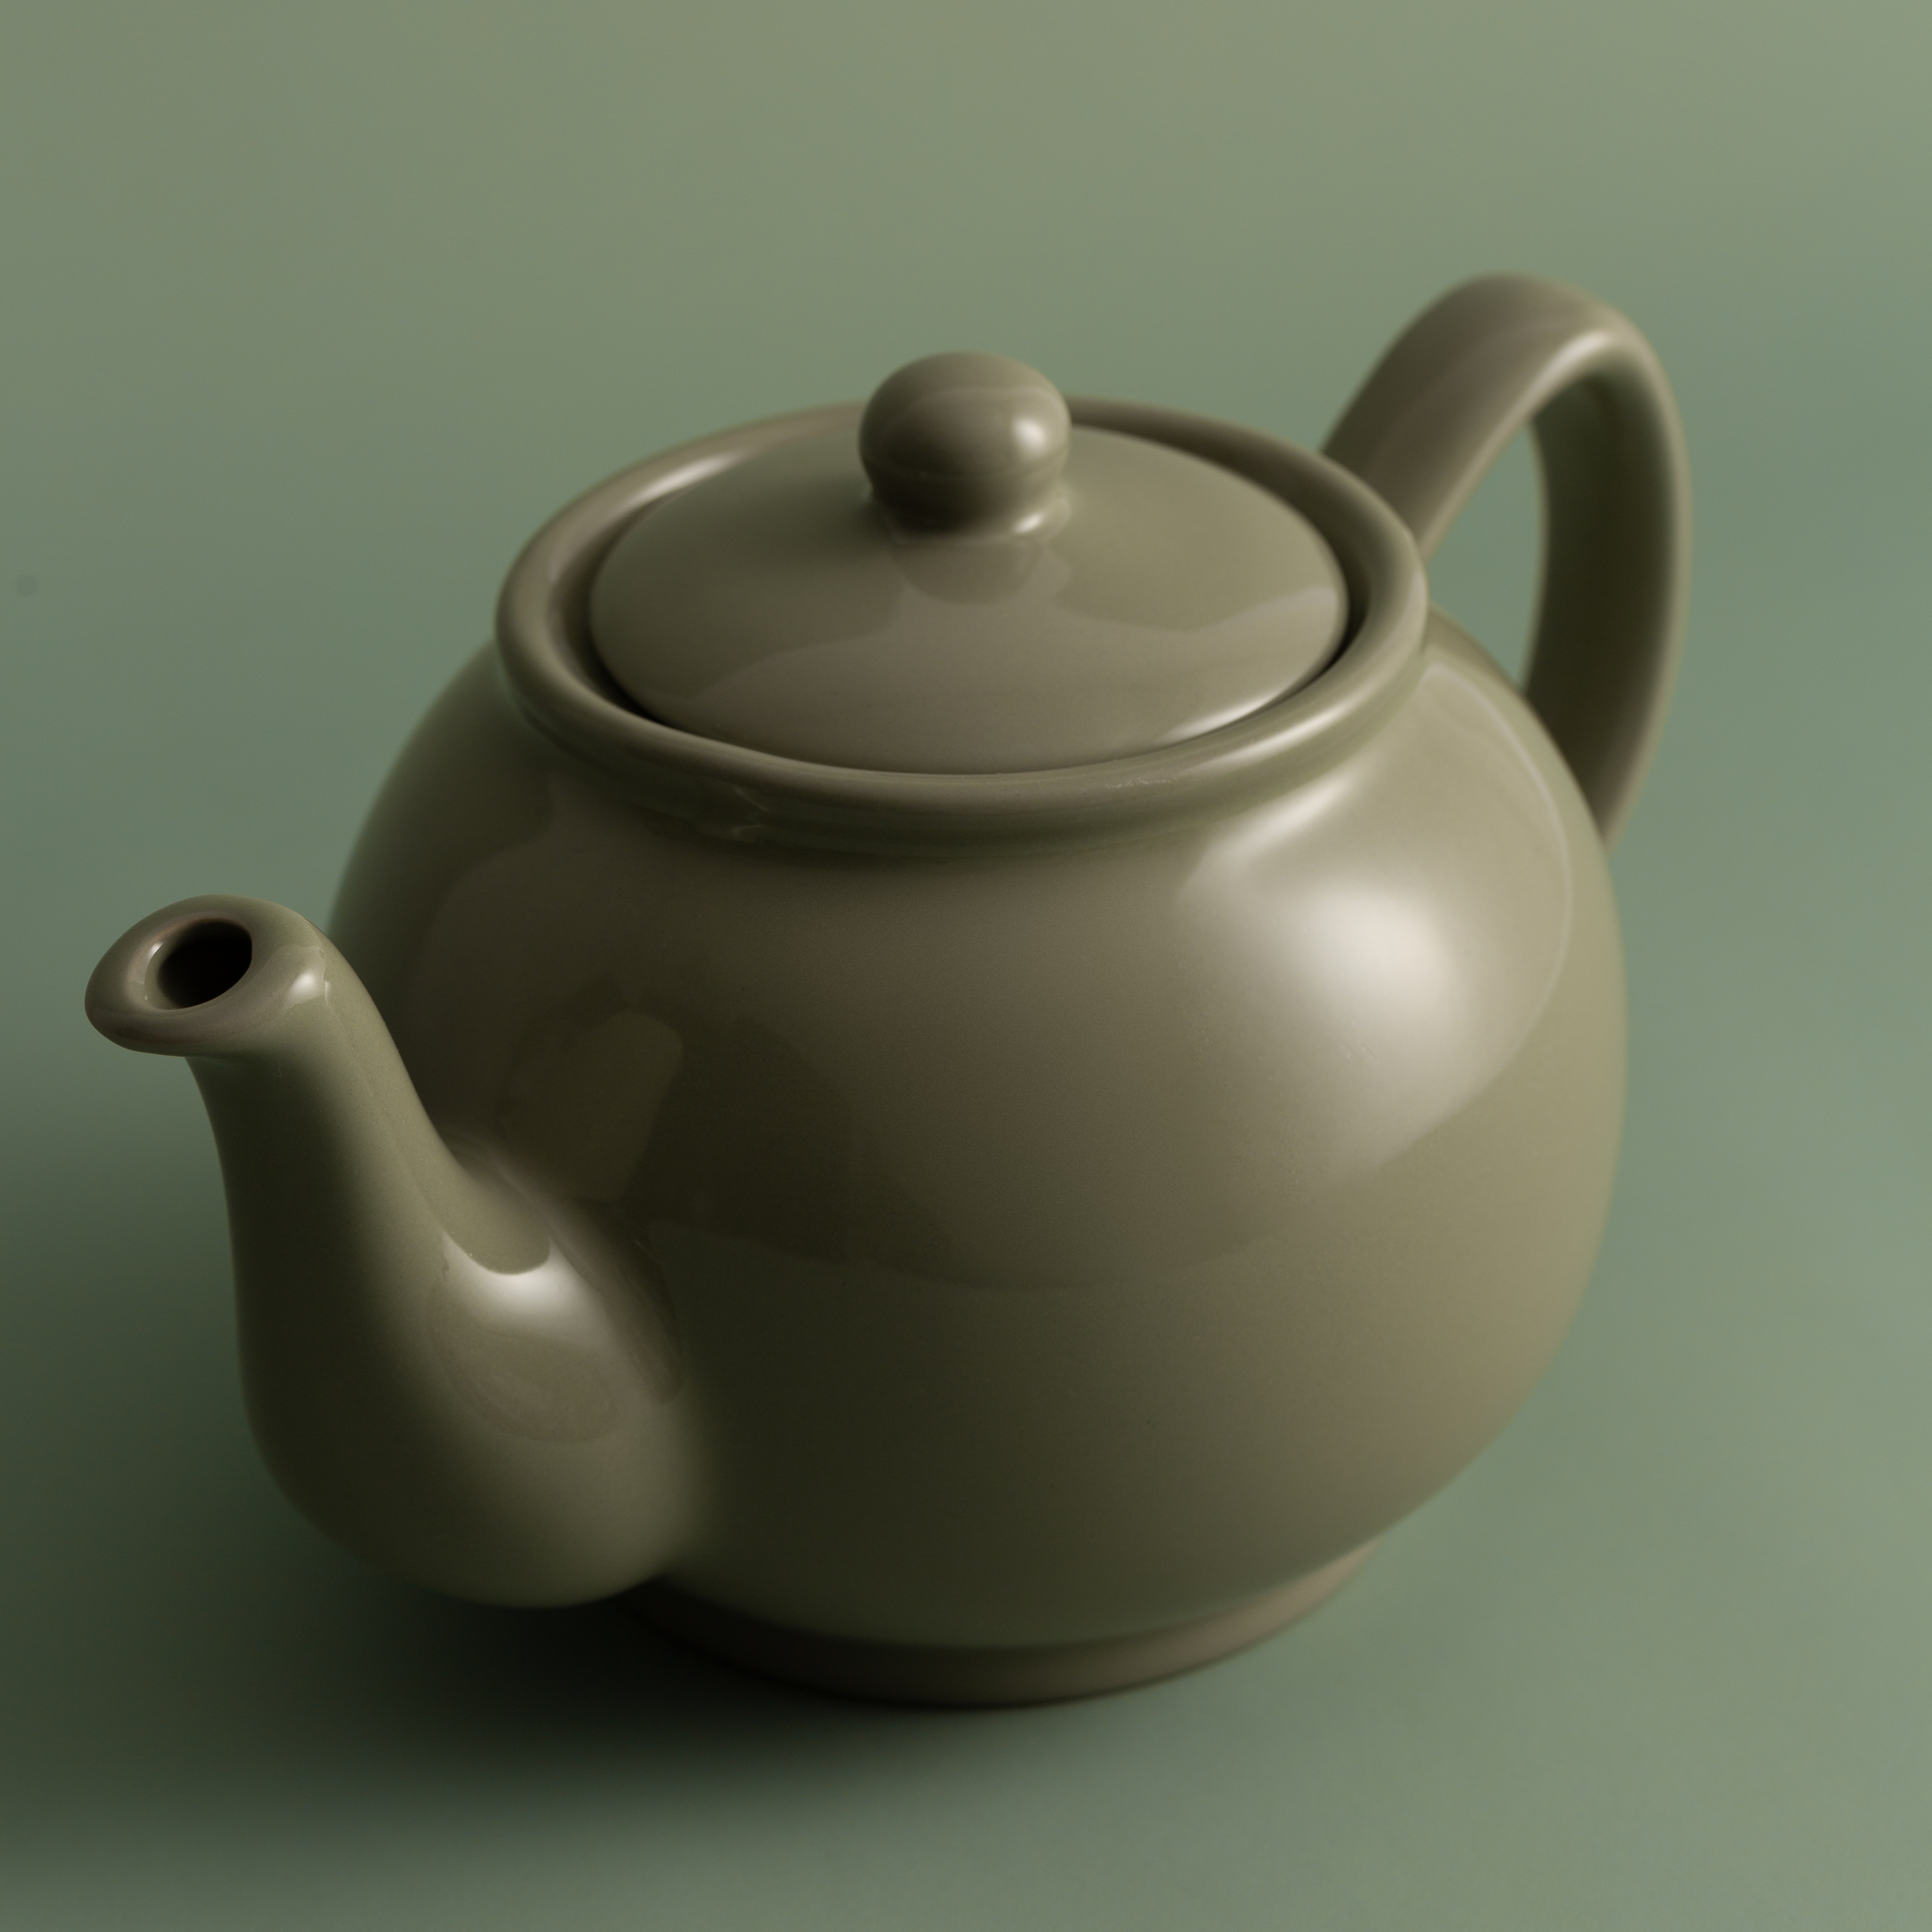 Price & Kensington - Teapot - Sage green